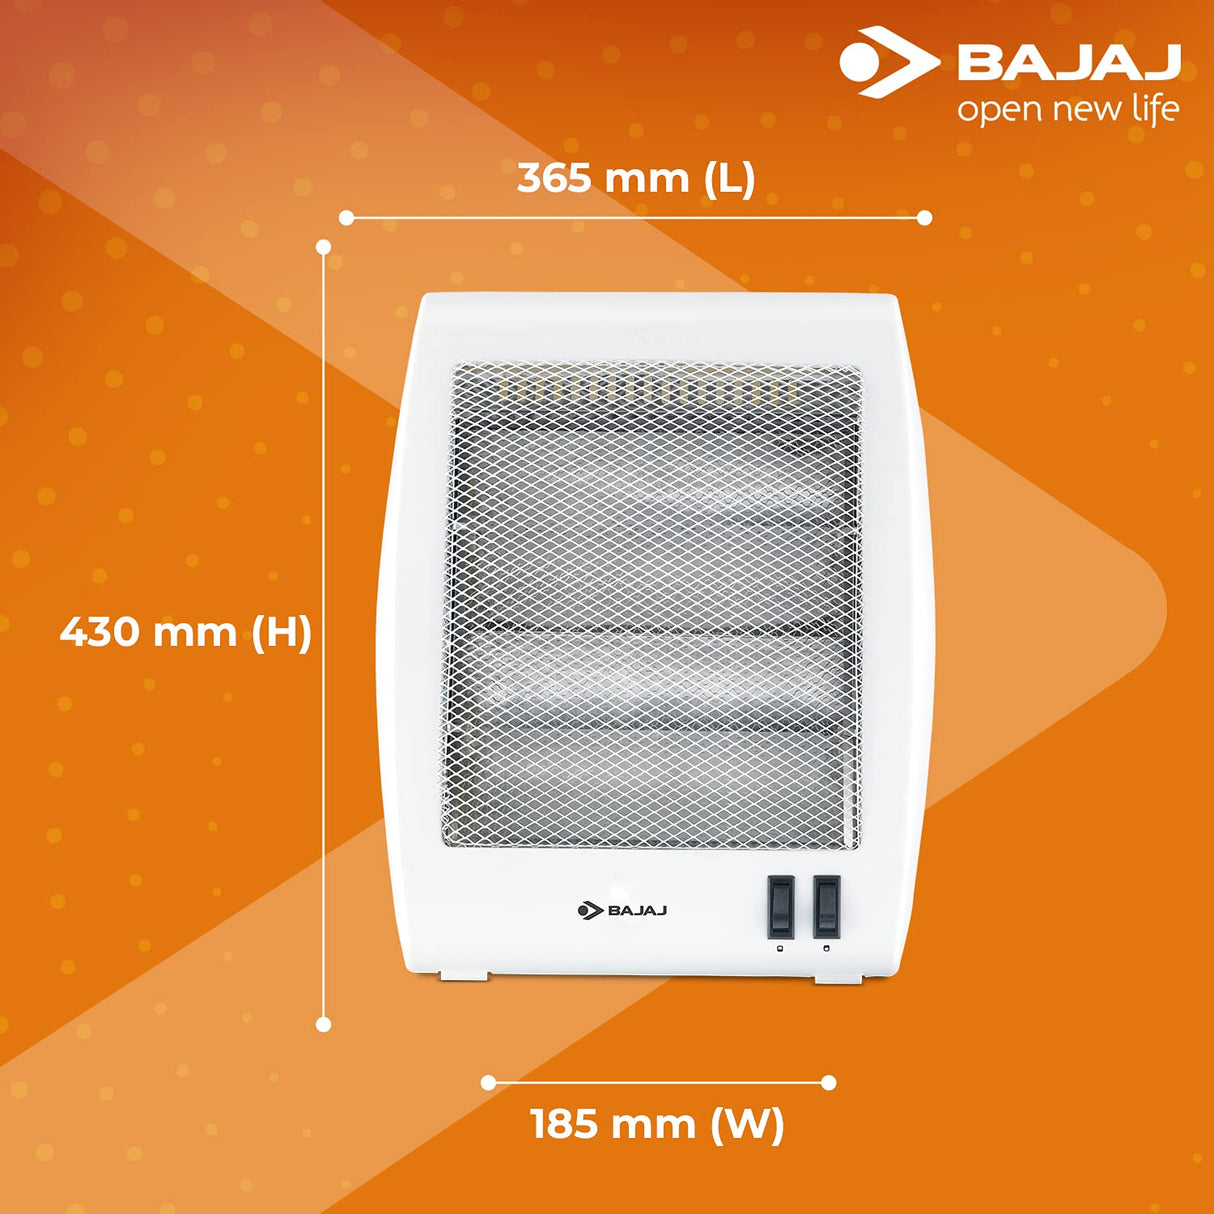 Efficient warmth: Bajaj RHX-2 800W - Portable solution for comfort.